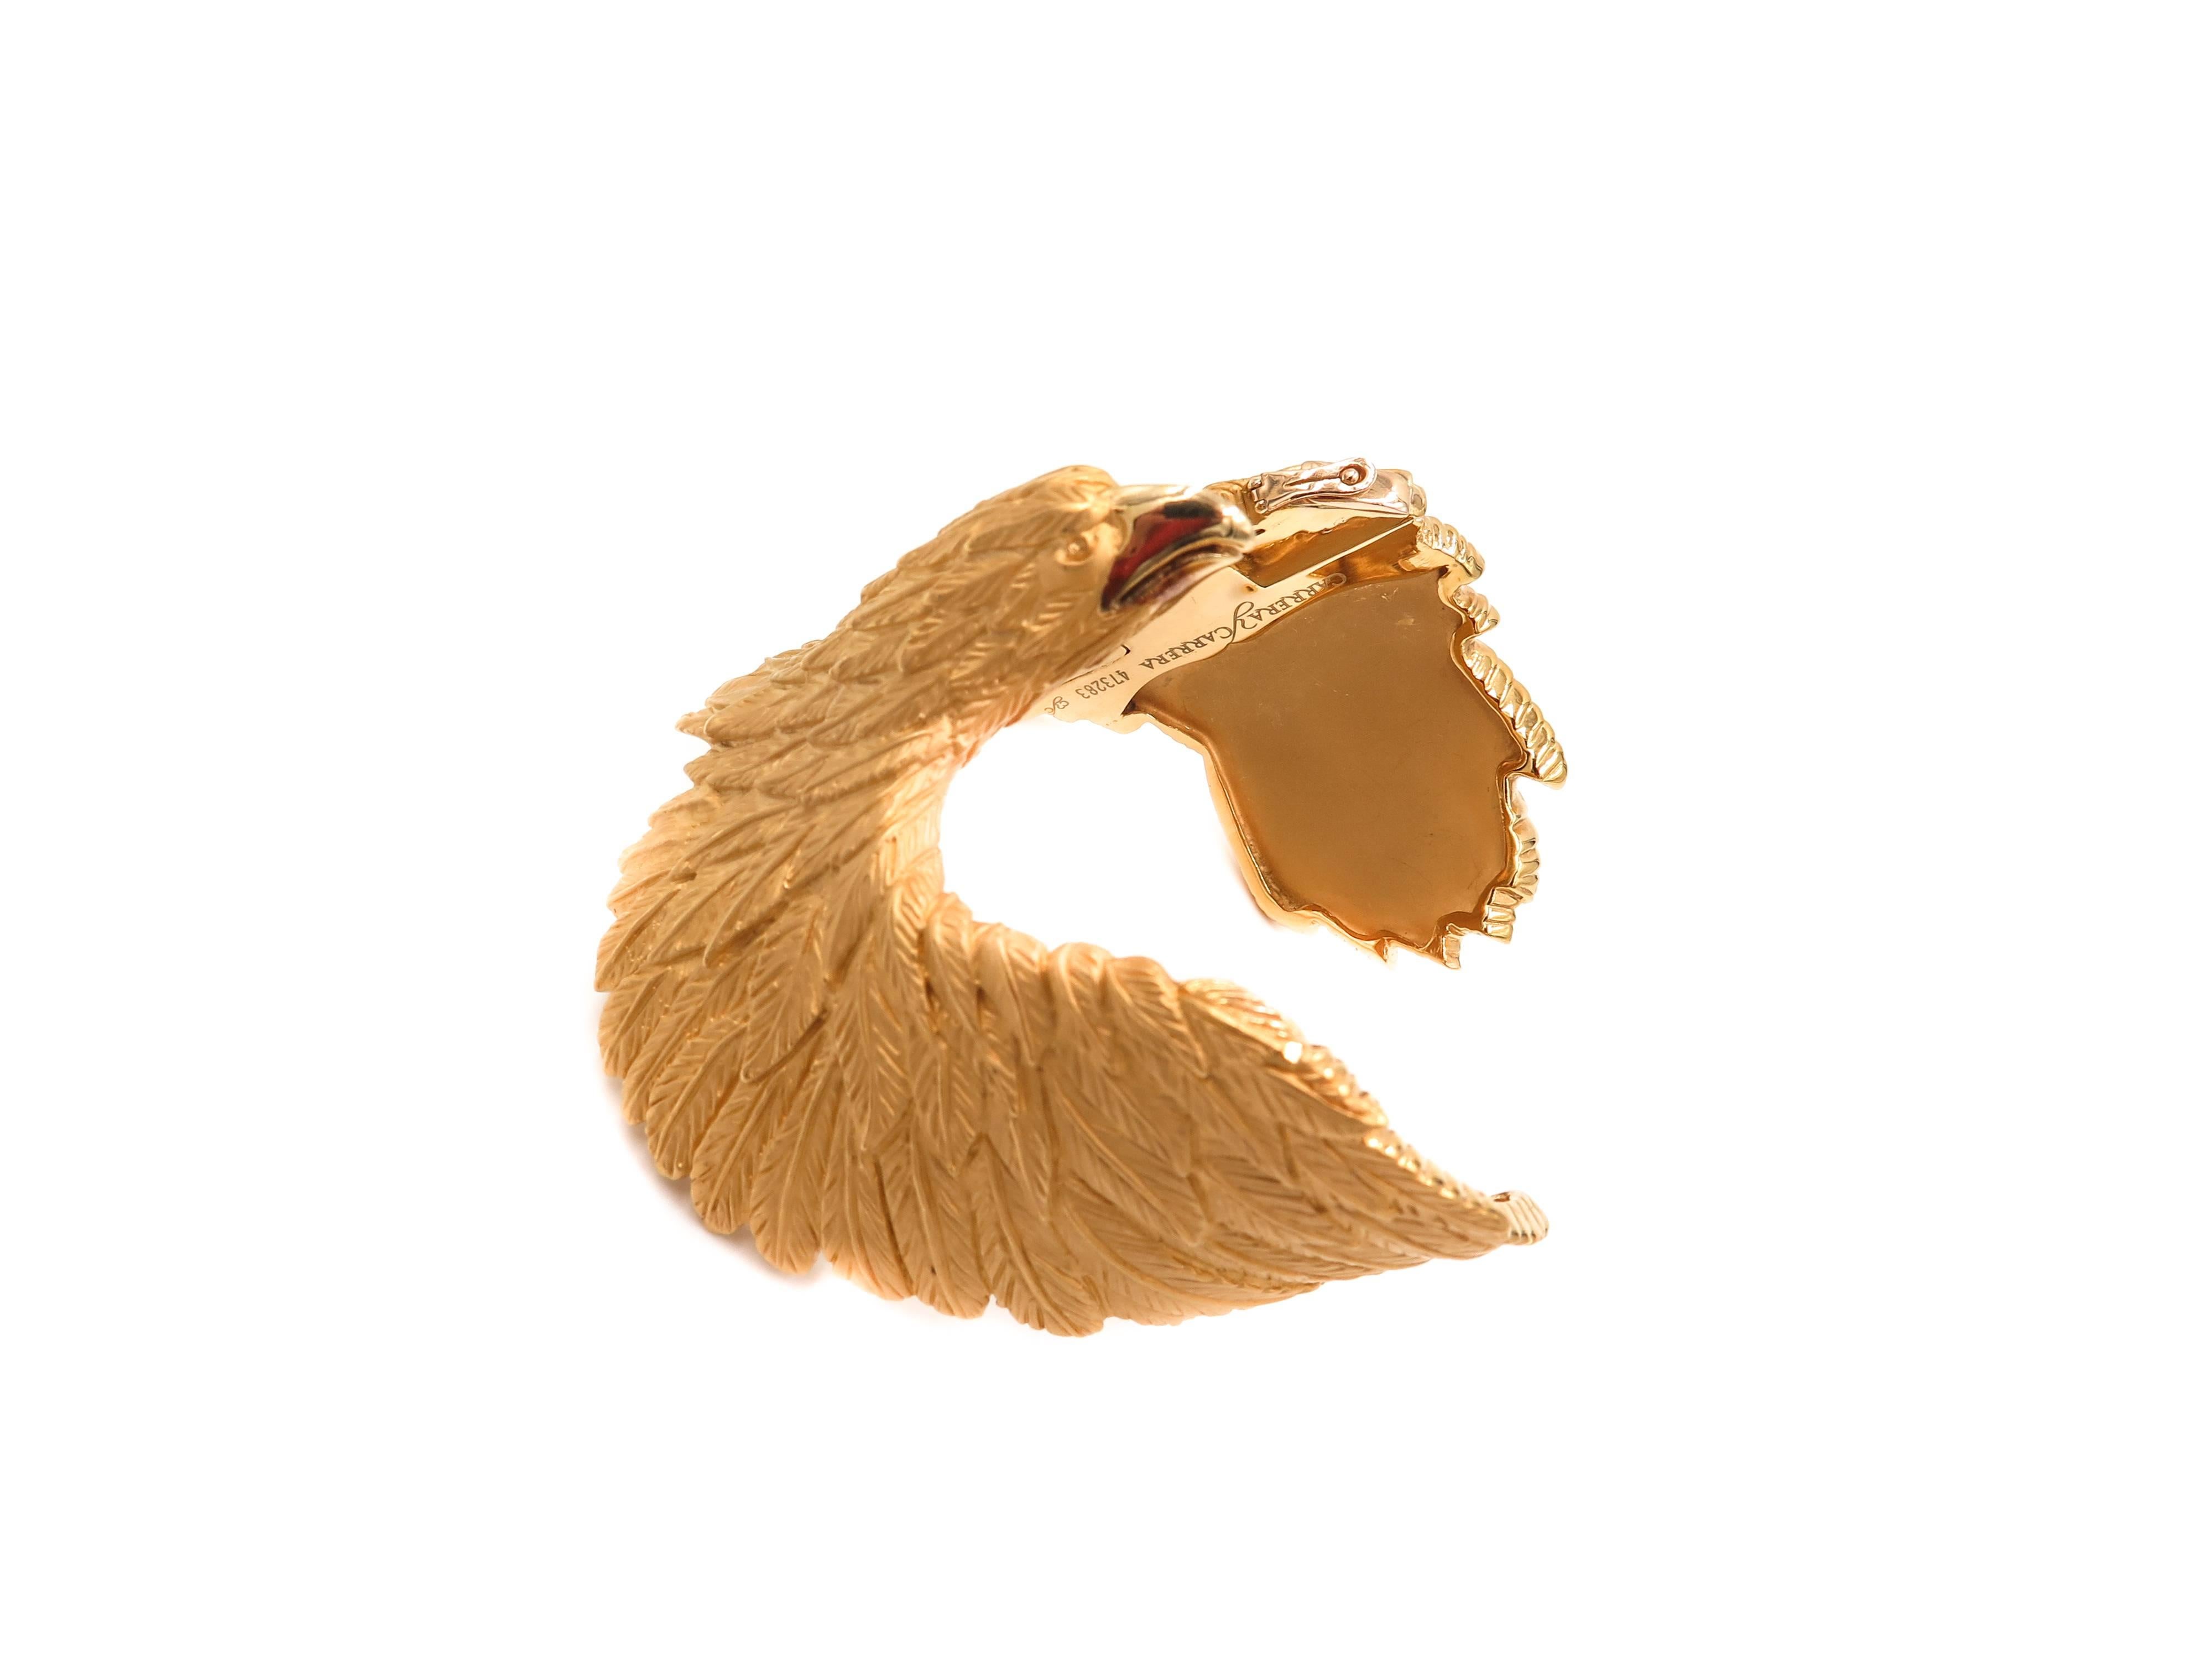 Eagle Yellow Gold Cuff Bracelet by Carrera y Carrera 1